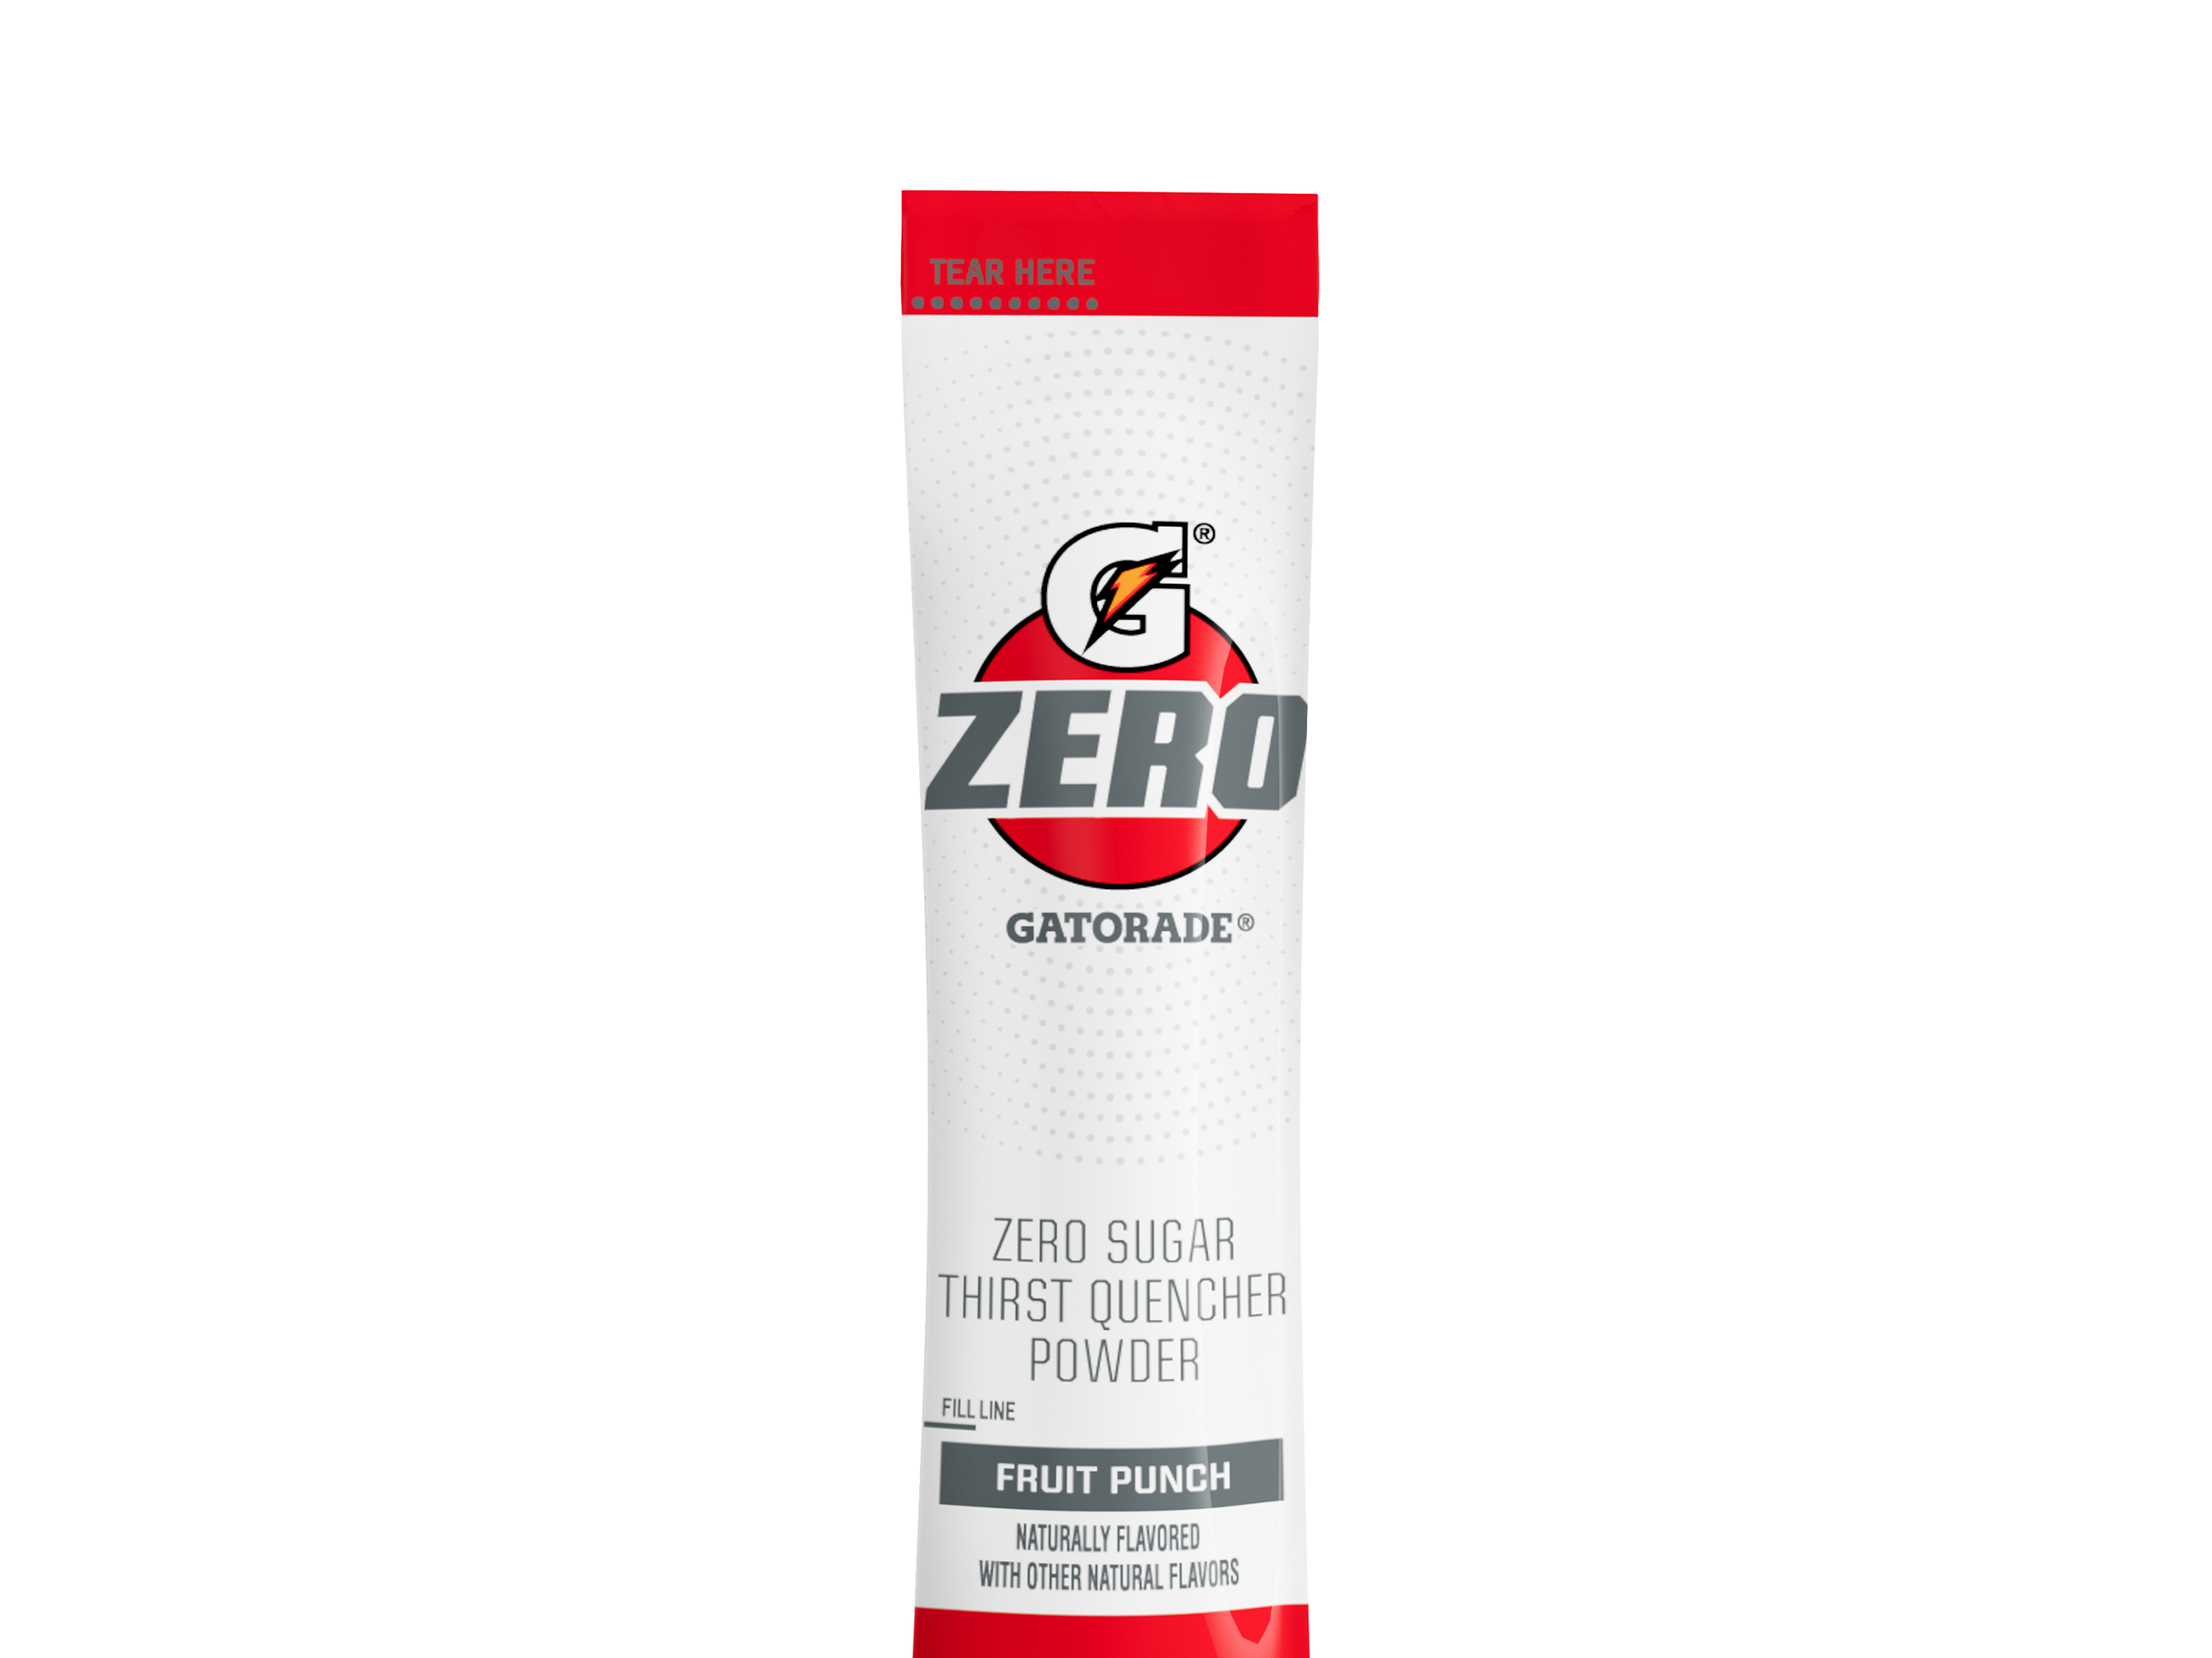 Gatorade zero fruit punch single serve powder